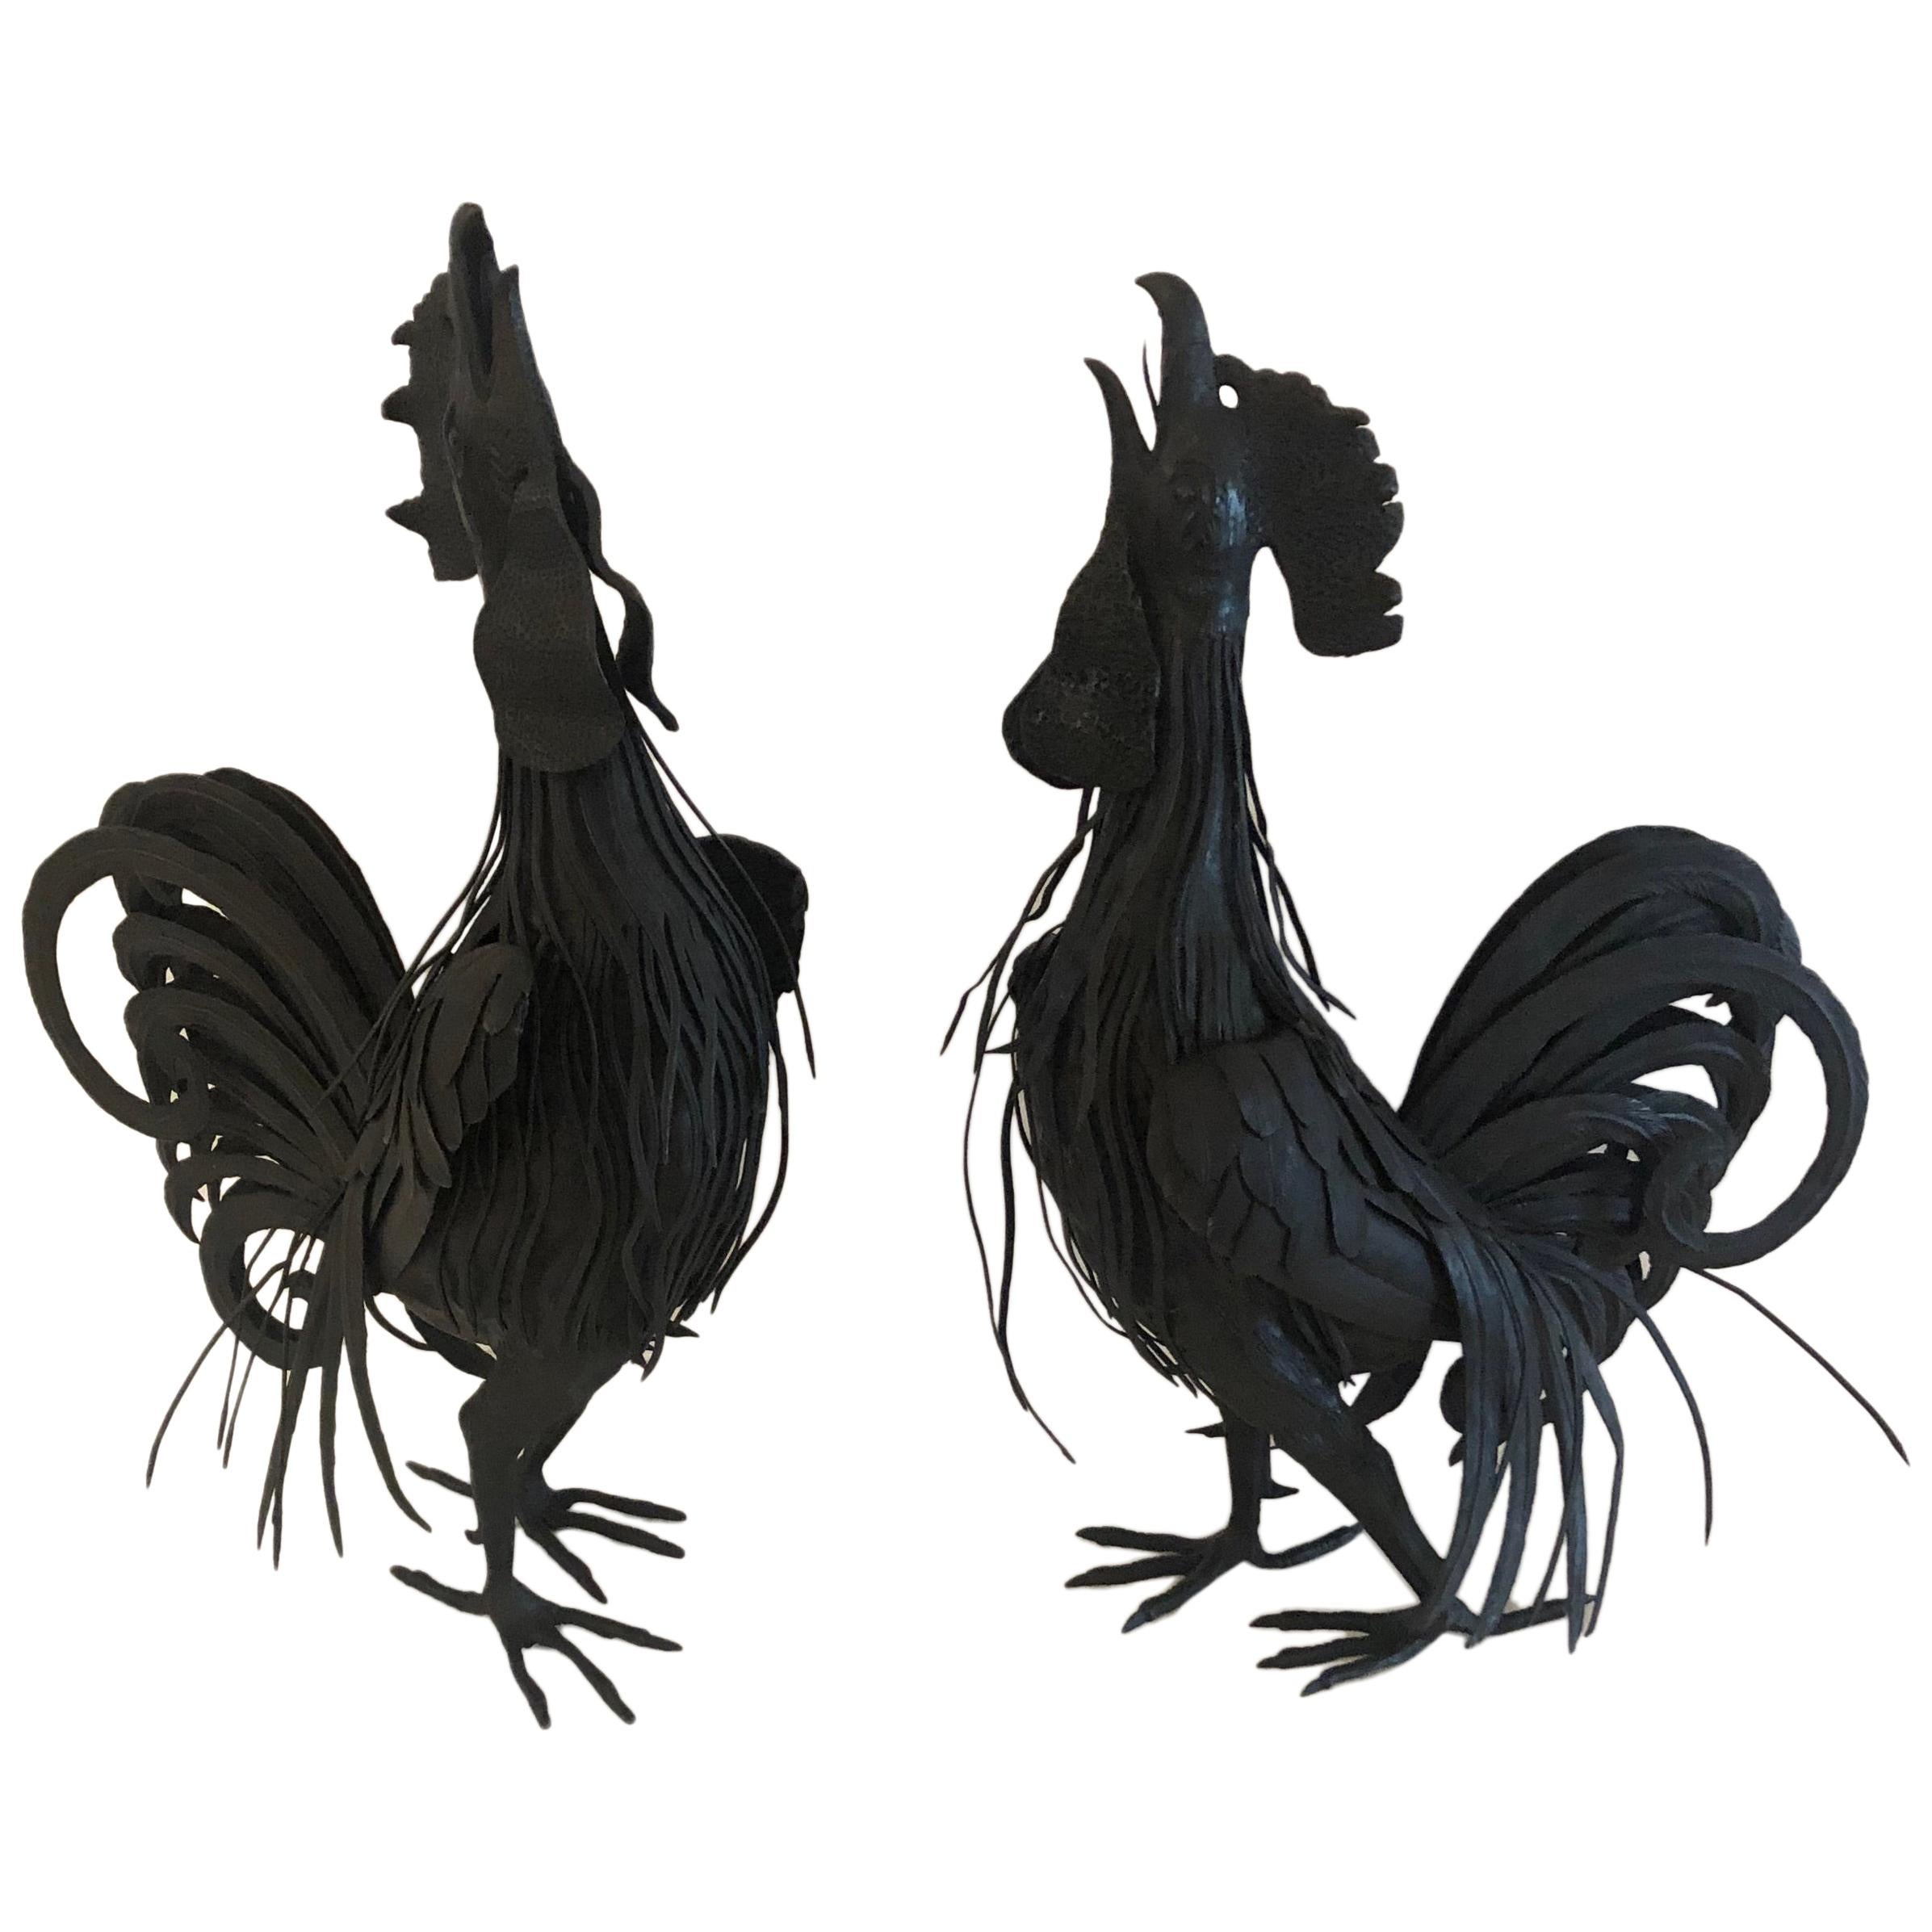 Wunderschönes Paar handgeschmiedeter eiserner Hahn-Skulpturen